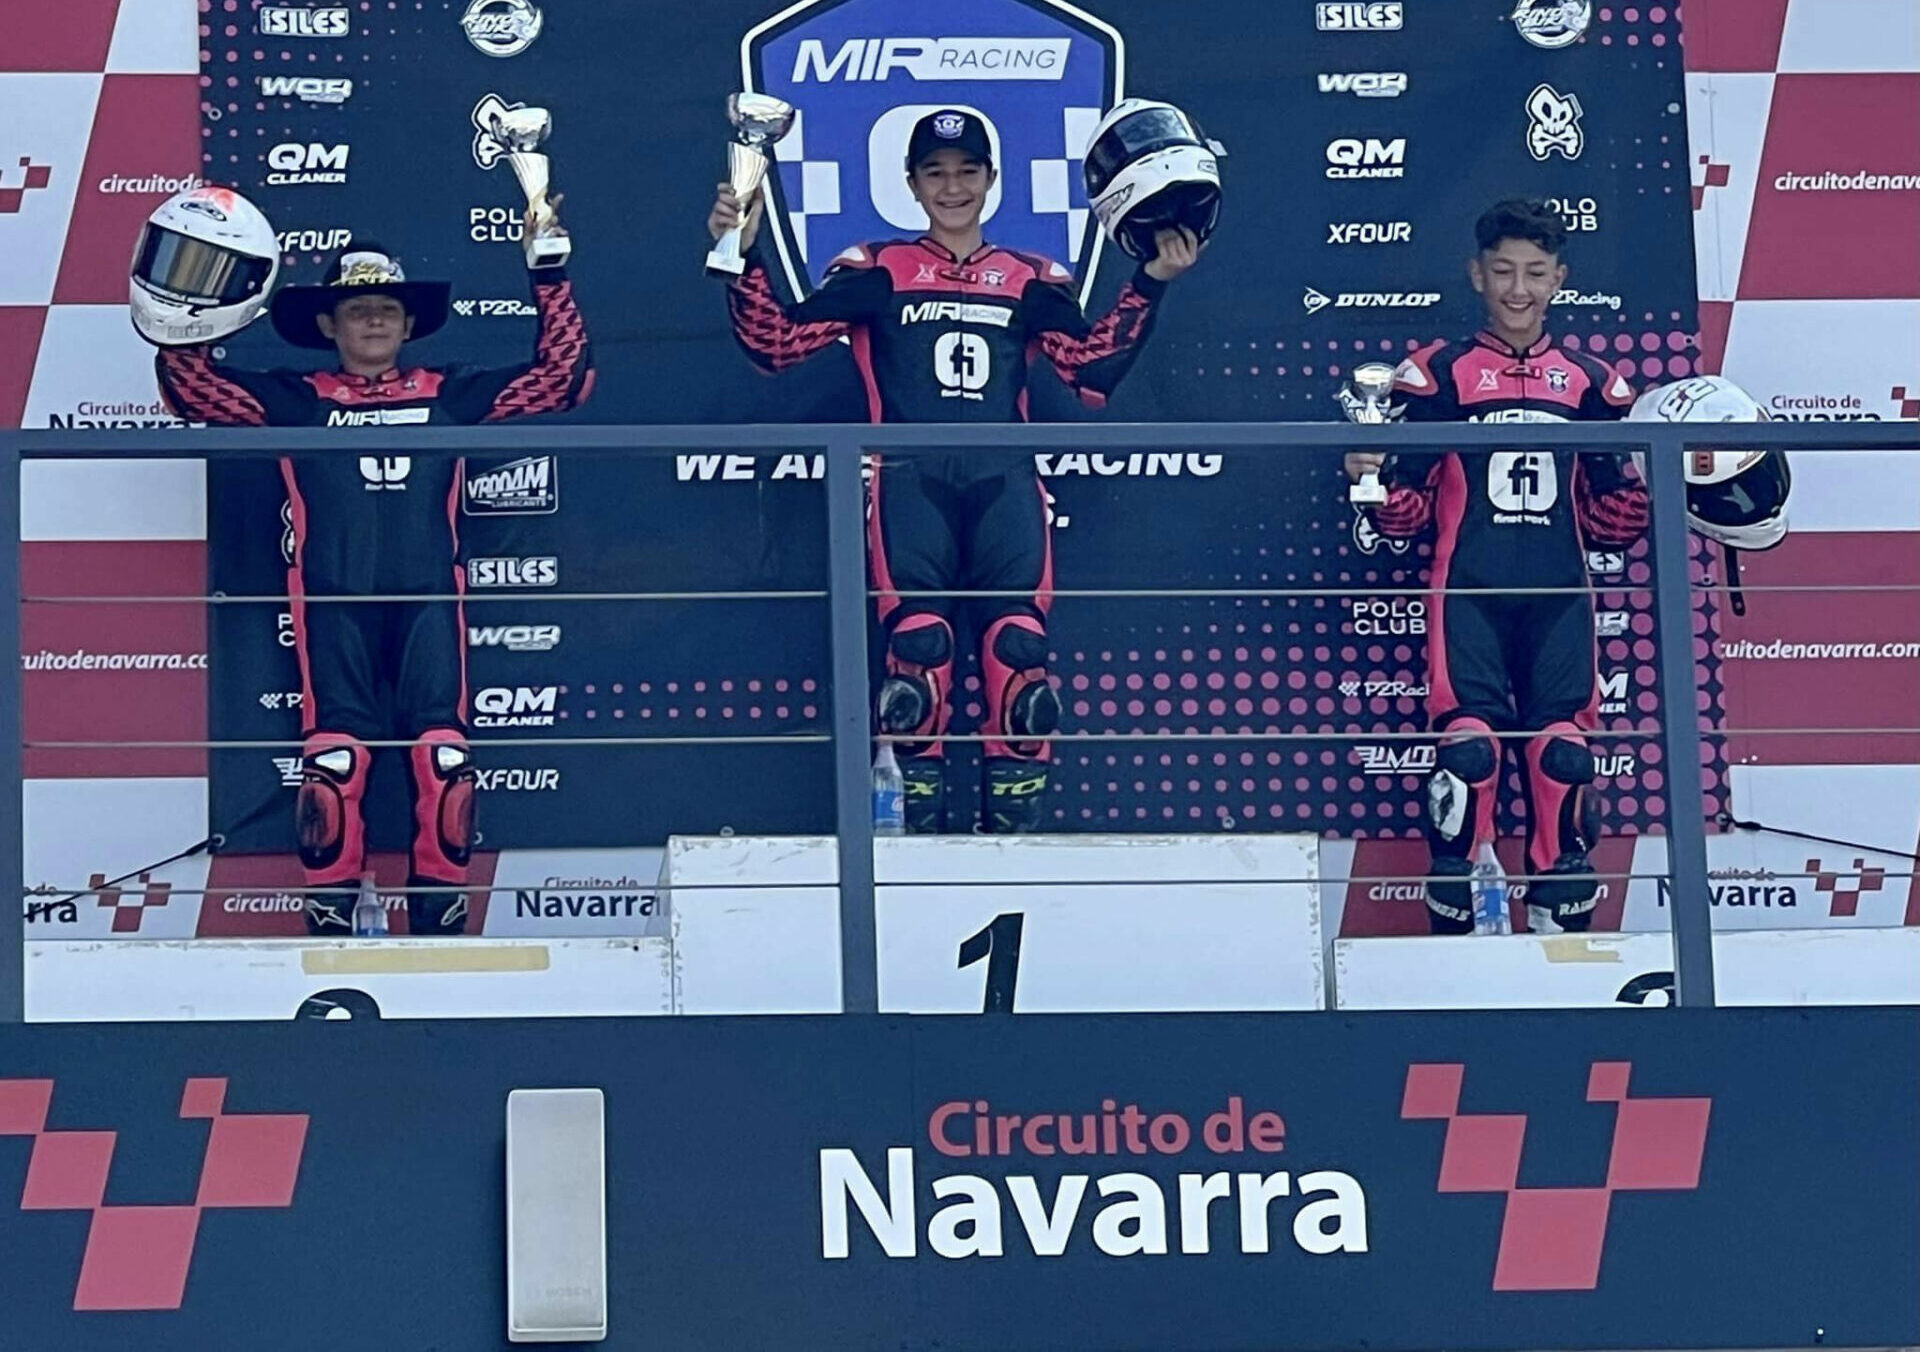 Mikey Lou Sanchez (left) on the podium at Circuito de Navarra, in Spain. Photo courtesy Sanchez Racing.